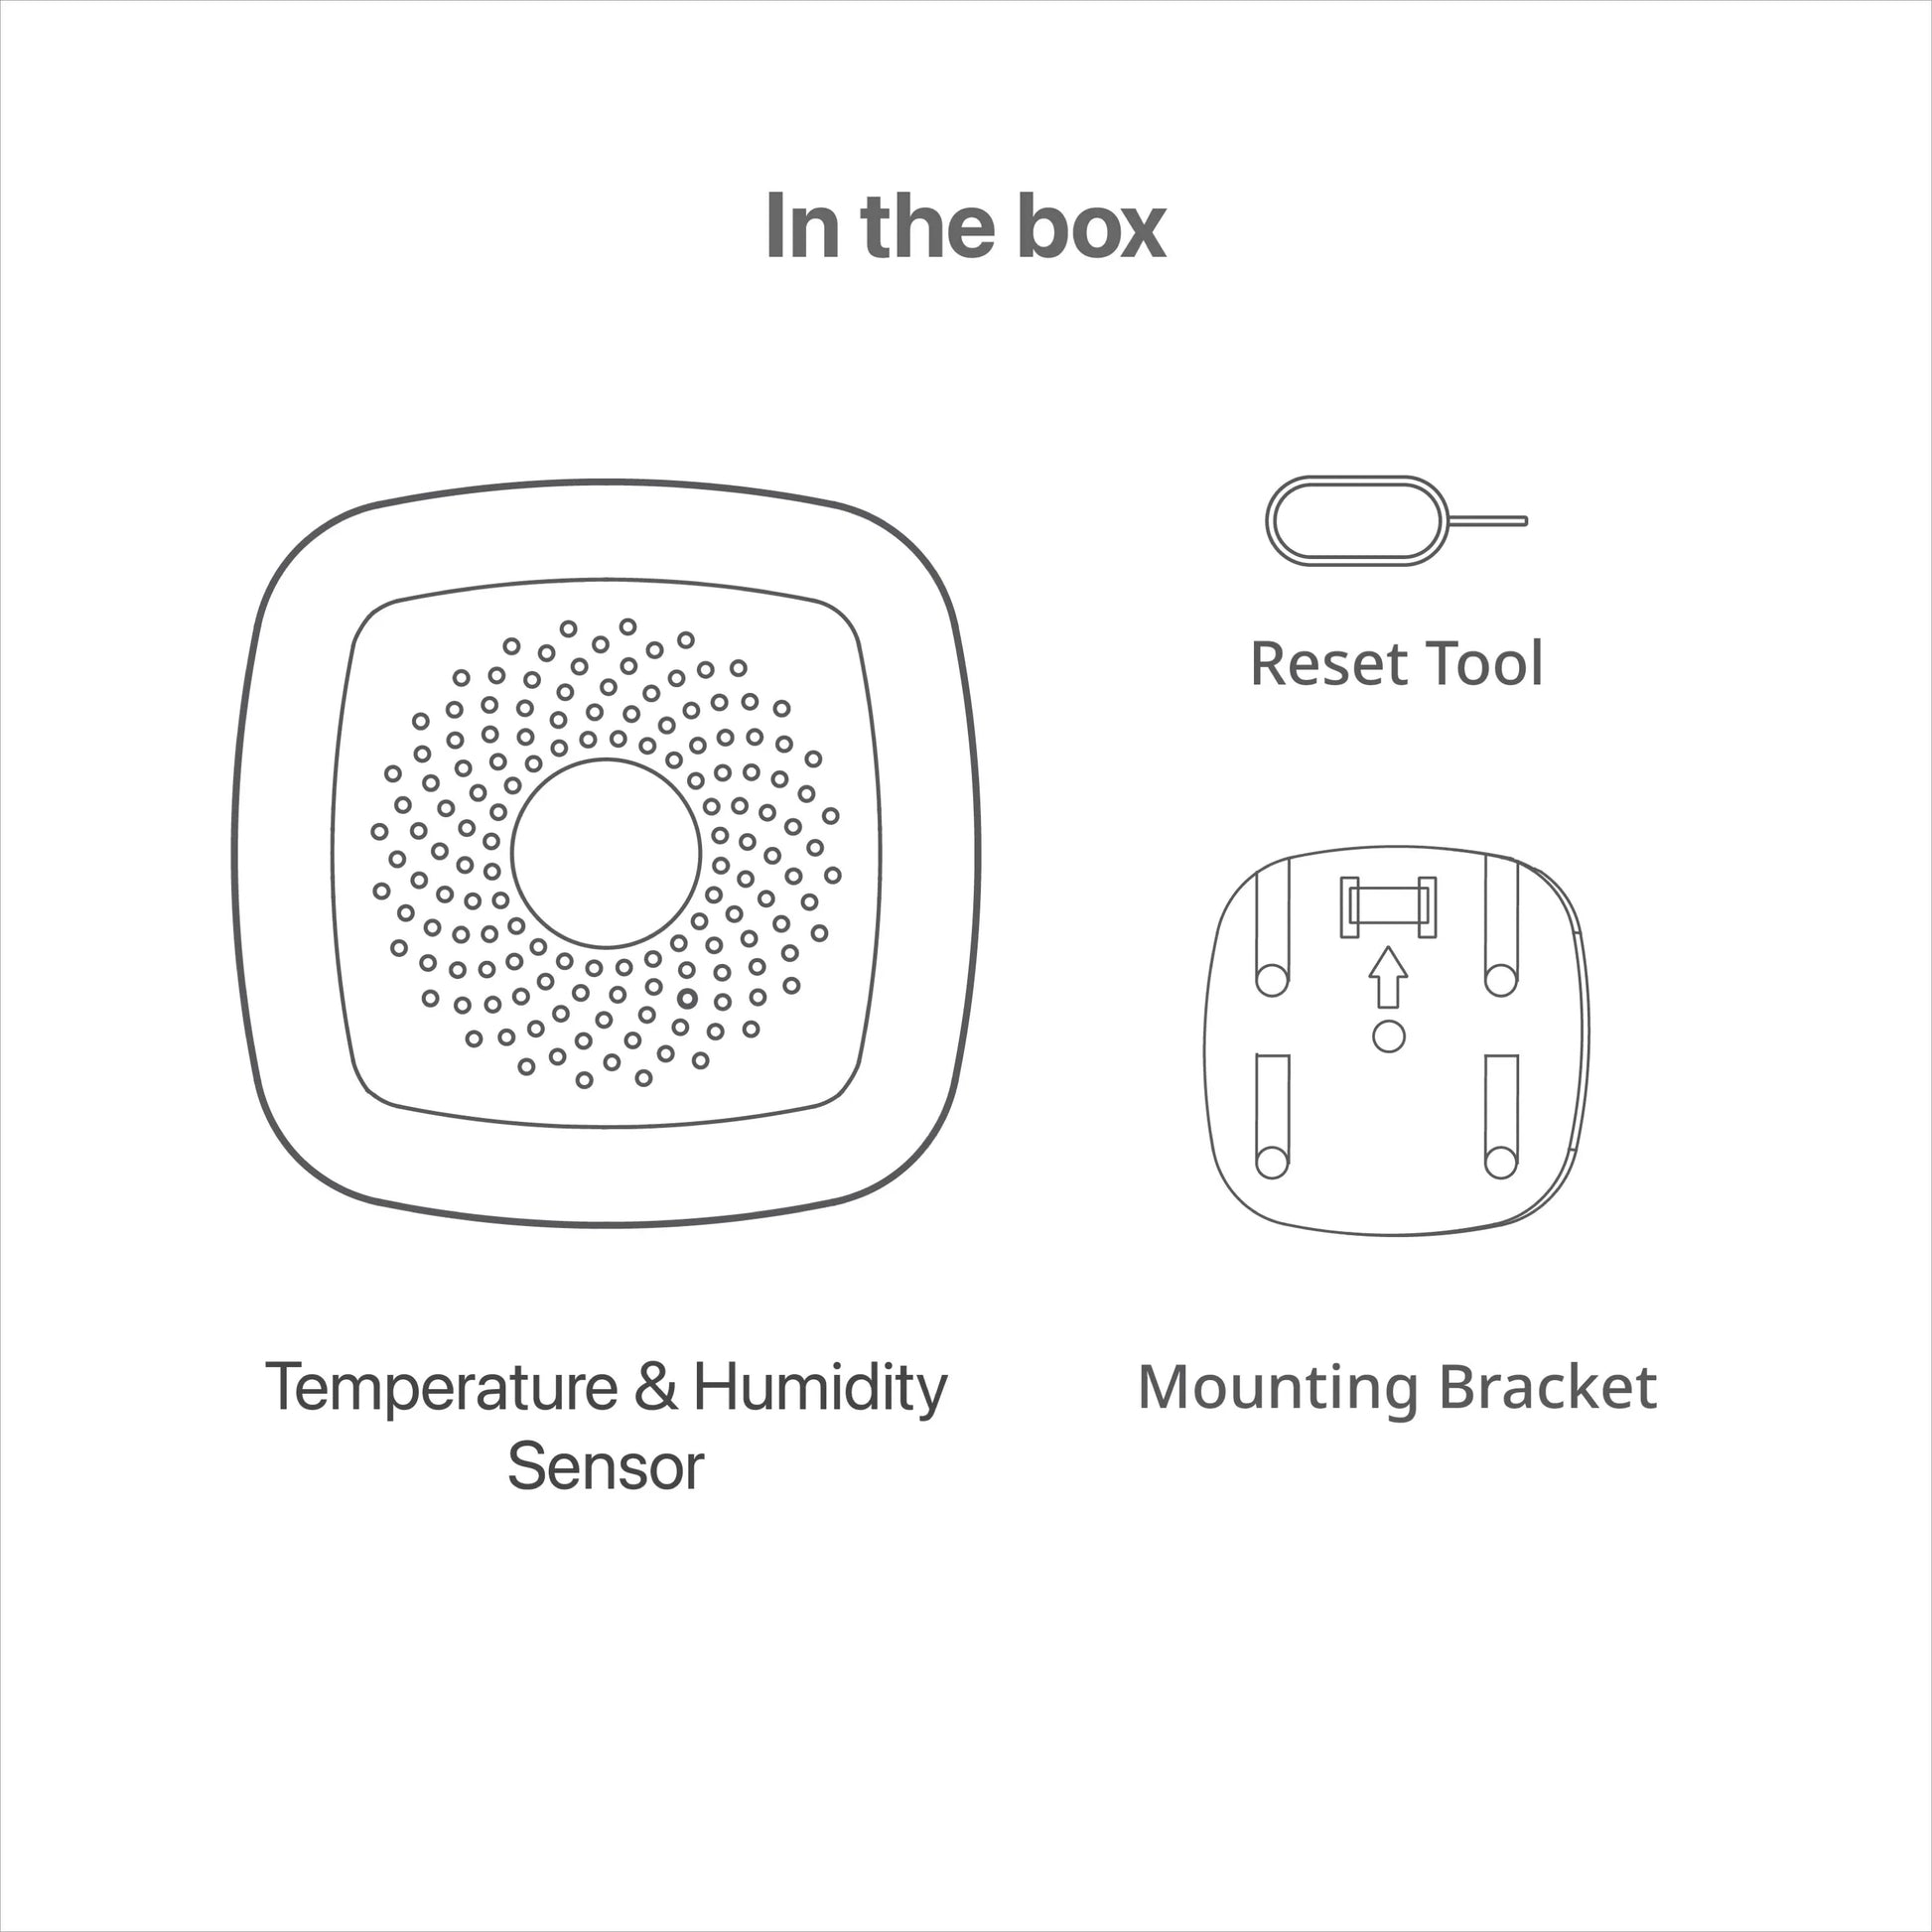 vanemar temperature and humidity sensor image in the box